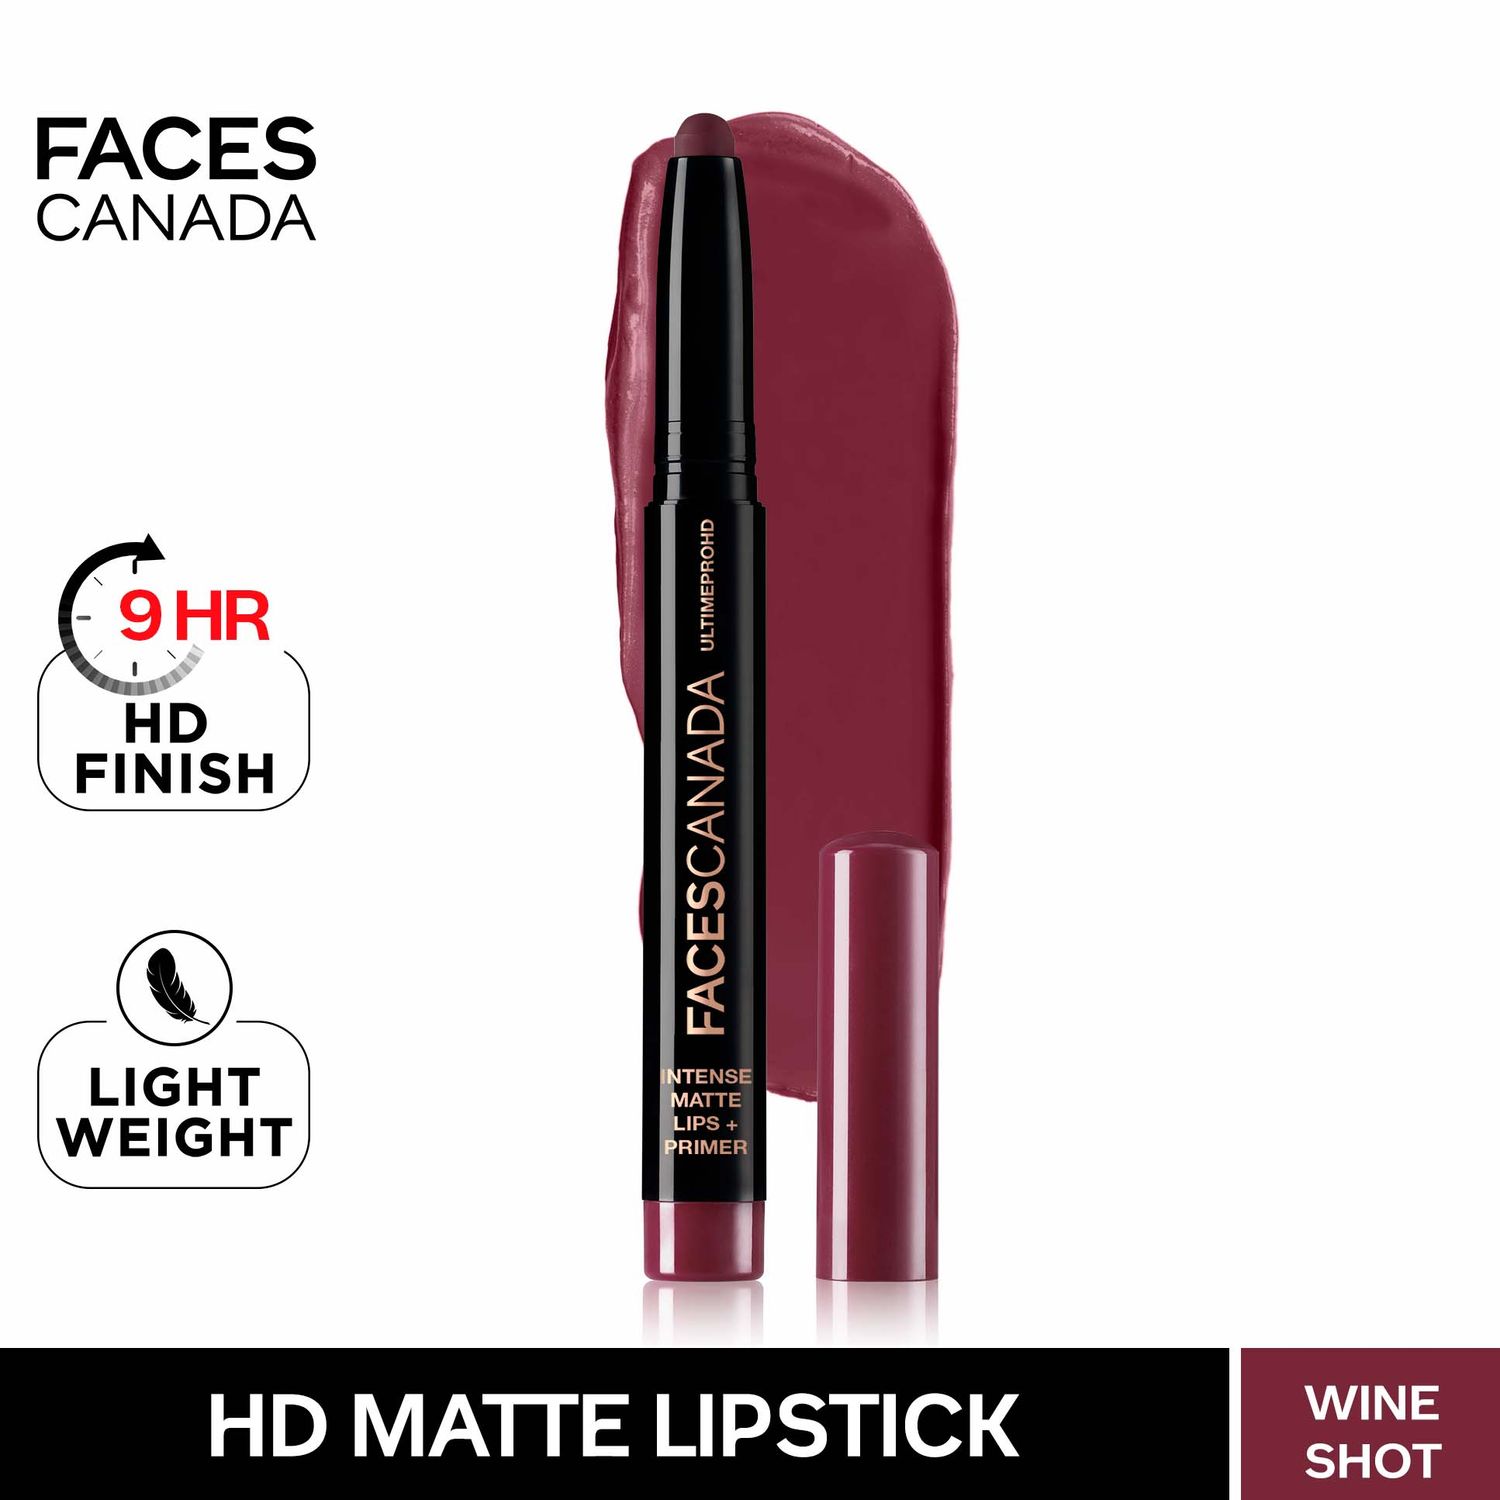 Faces Canada Ultime Pro HD Intense Matte Lips + Primer - Wine Shot (1.4 g)